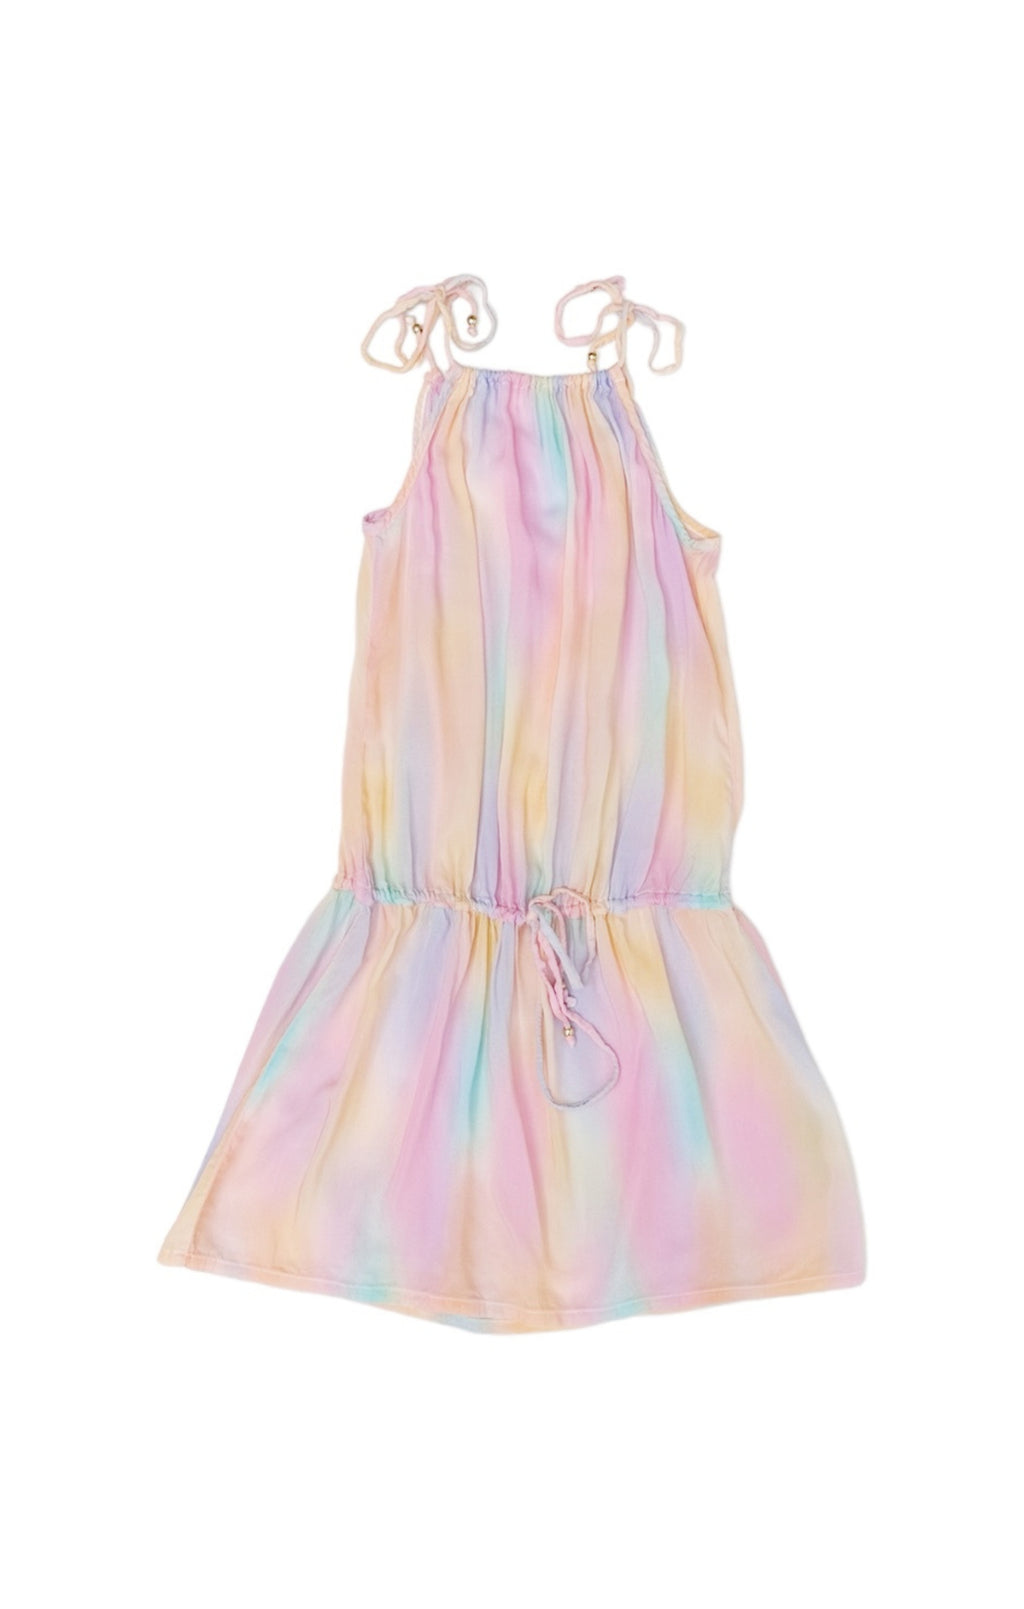 PILYQ Dress Size: Toddler M